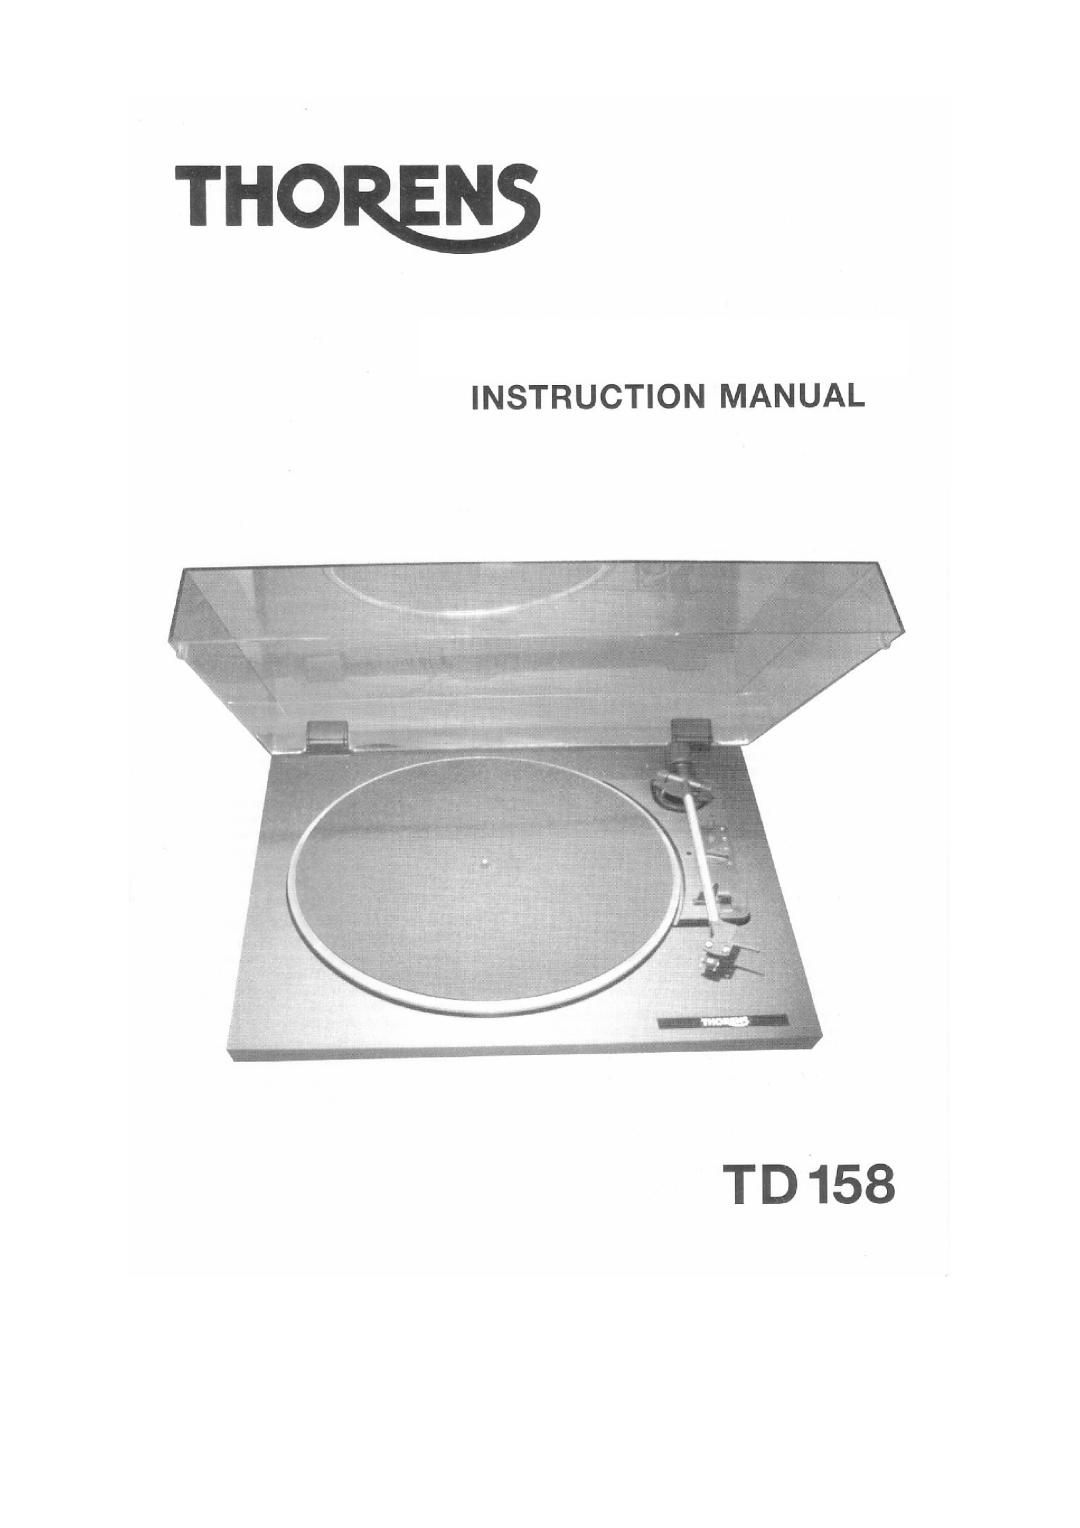 THORENS TD158 manual 